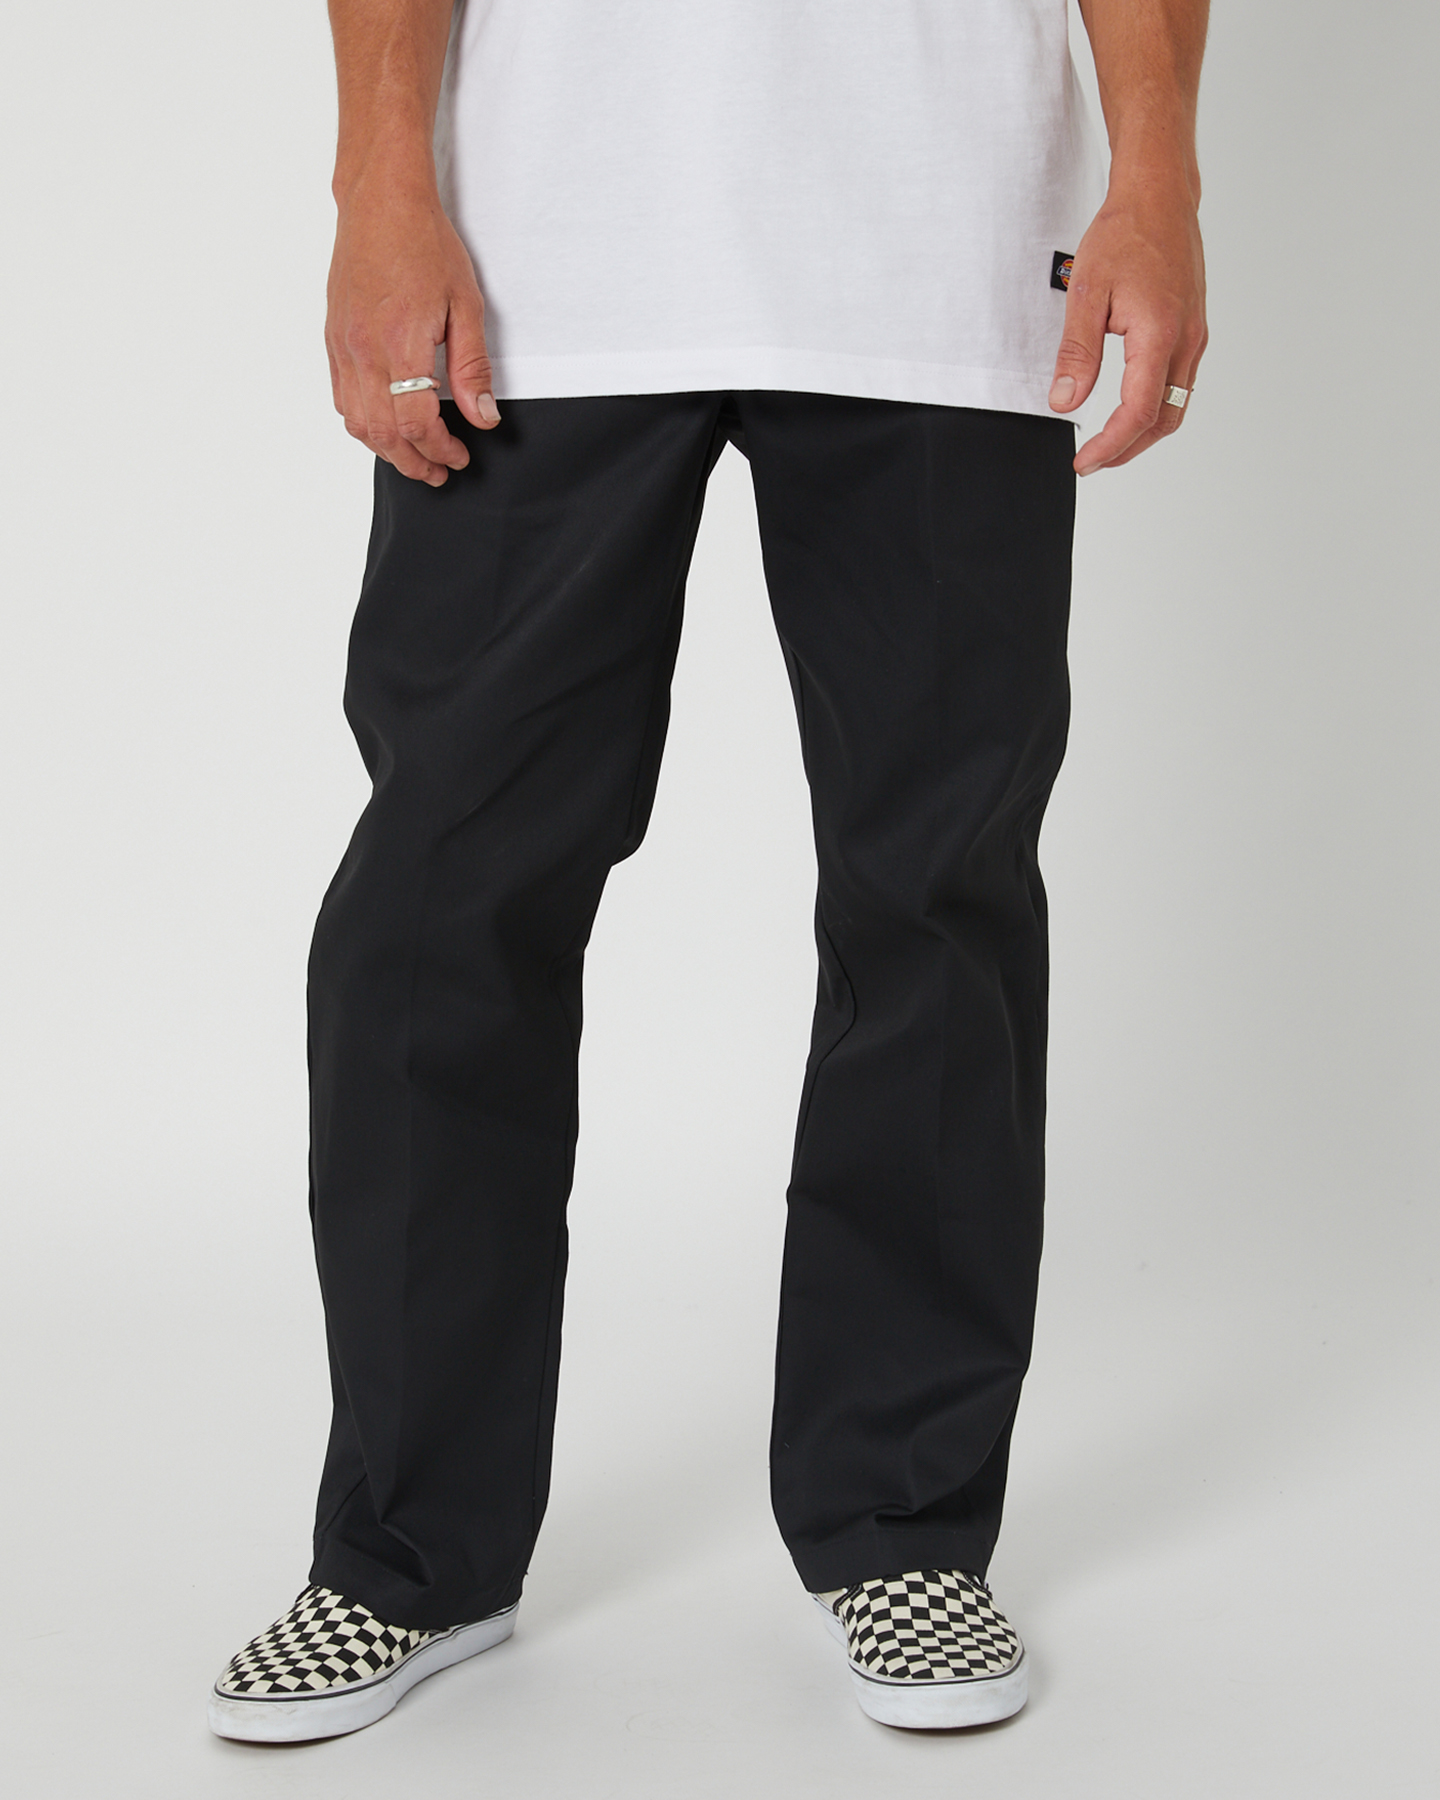 New Dickies Men's 874 Original Fit Work Pant Cotton Polyester White | eBay